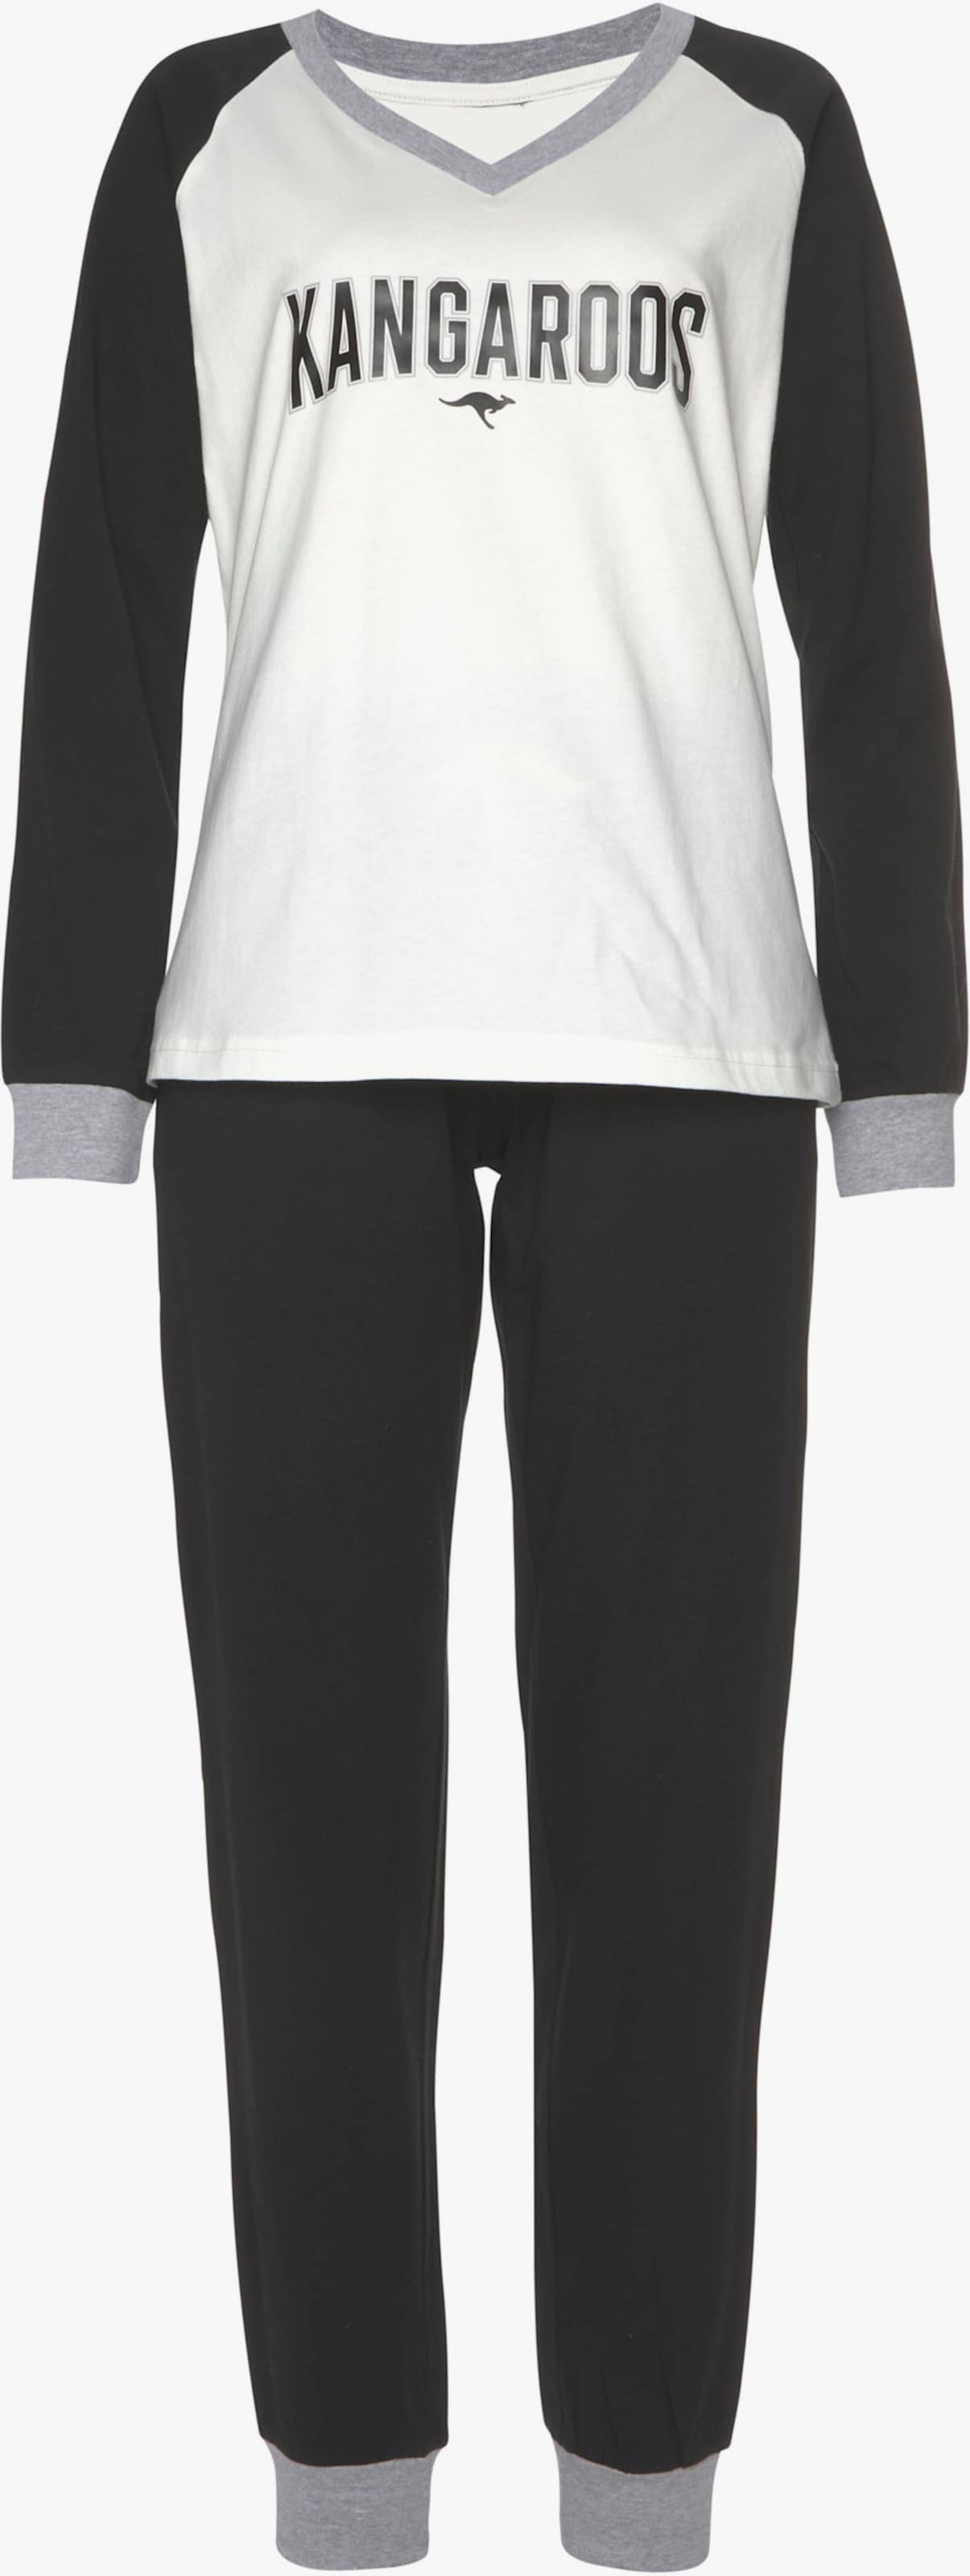 KangaROOS Pyjama - schwarz-weiß